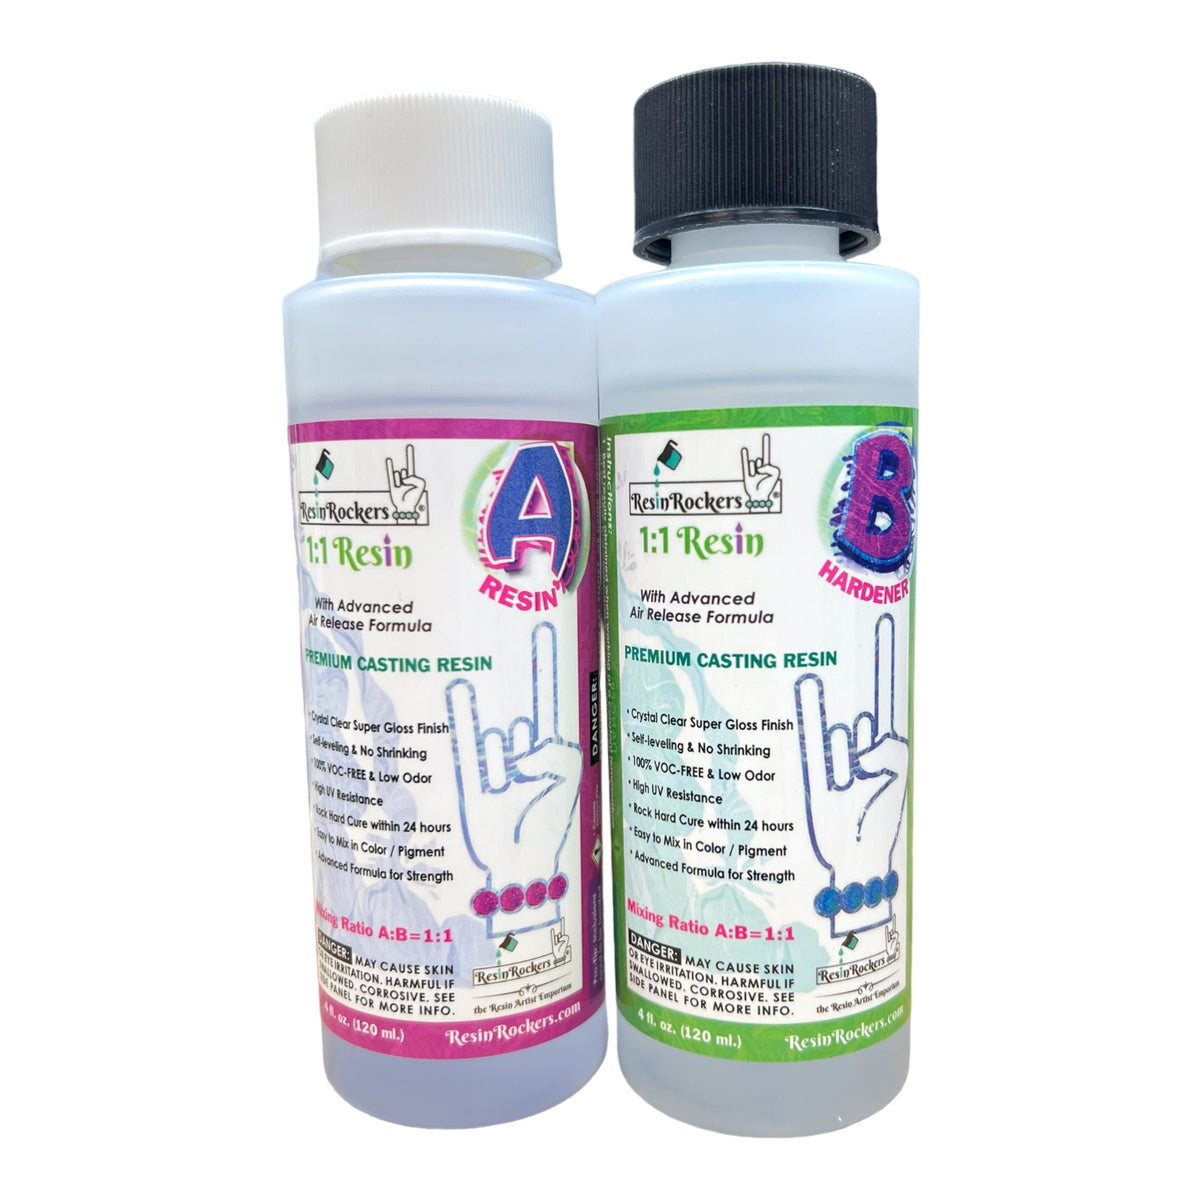 ArtResin 16oz Clear Epoxy Resin & Hardener Kit